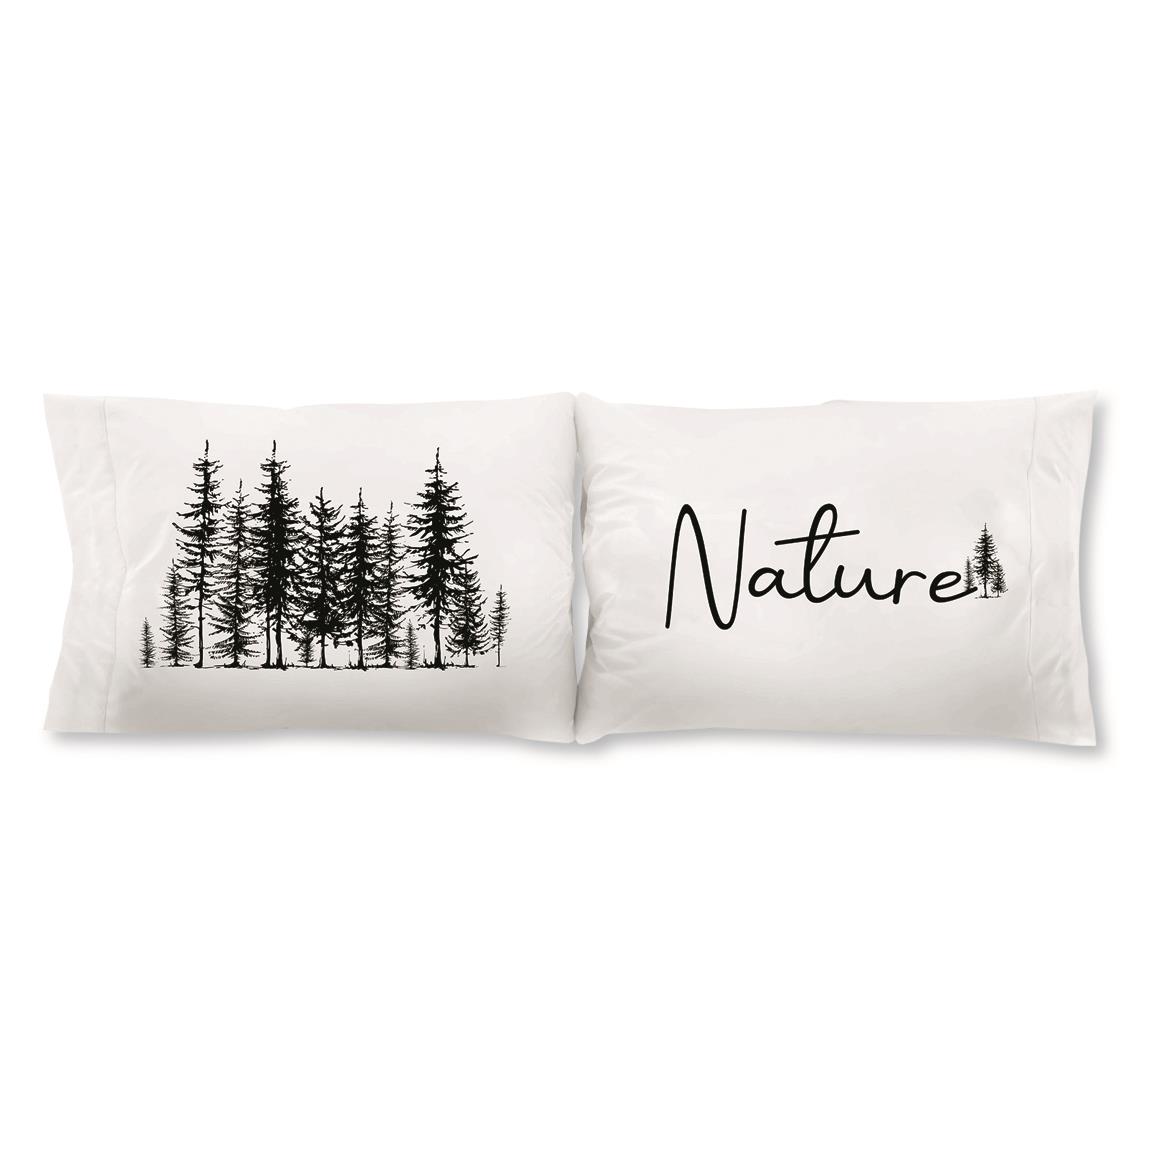 Safdie & Co.Printed Pillowcase, 2 Pack, Nature